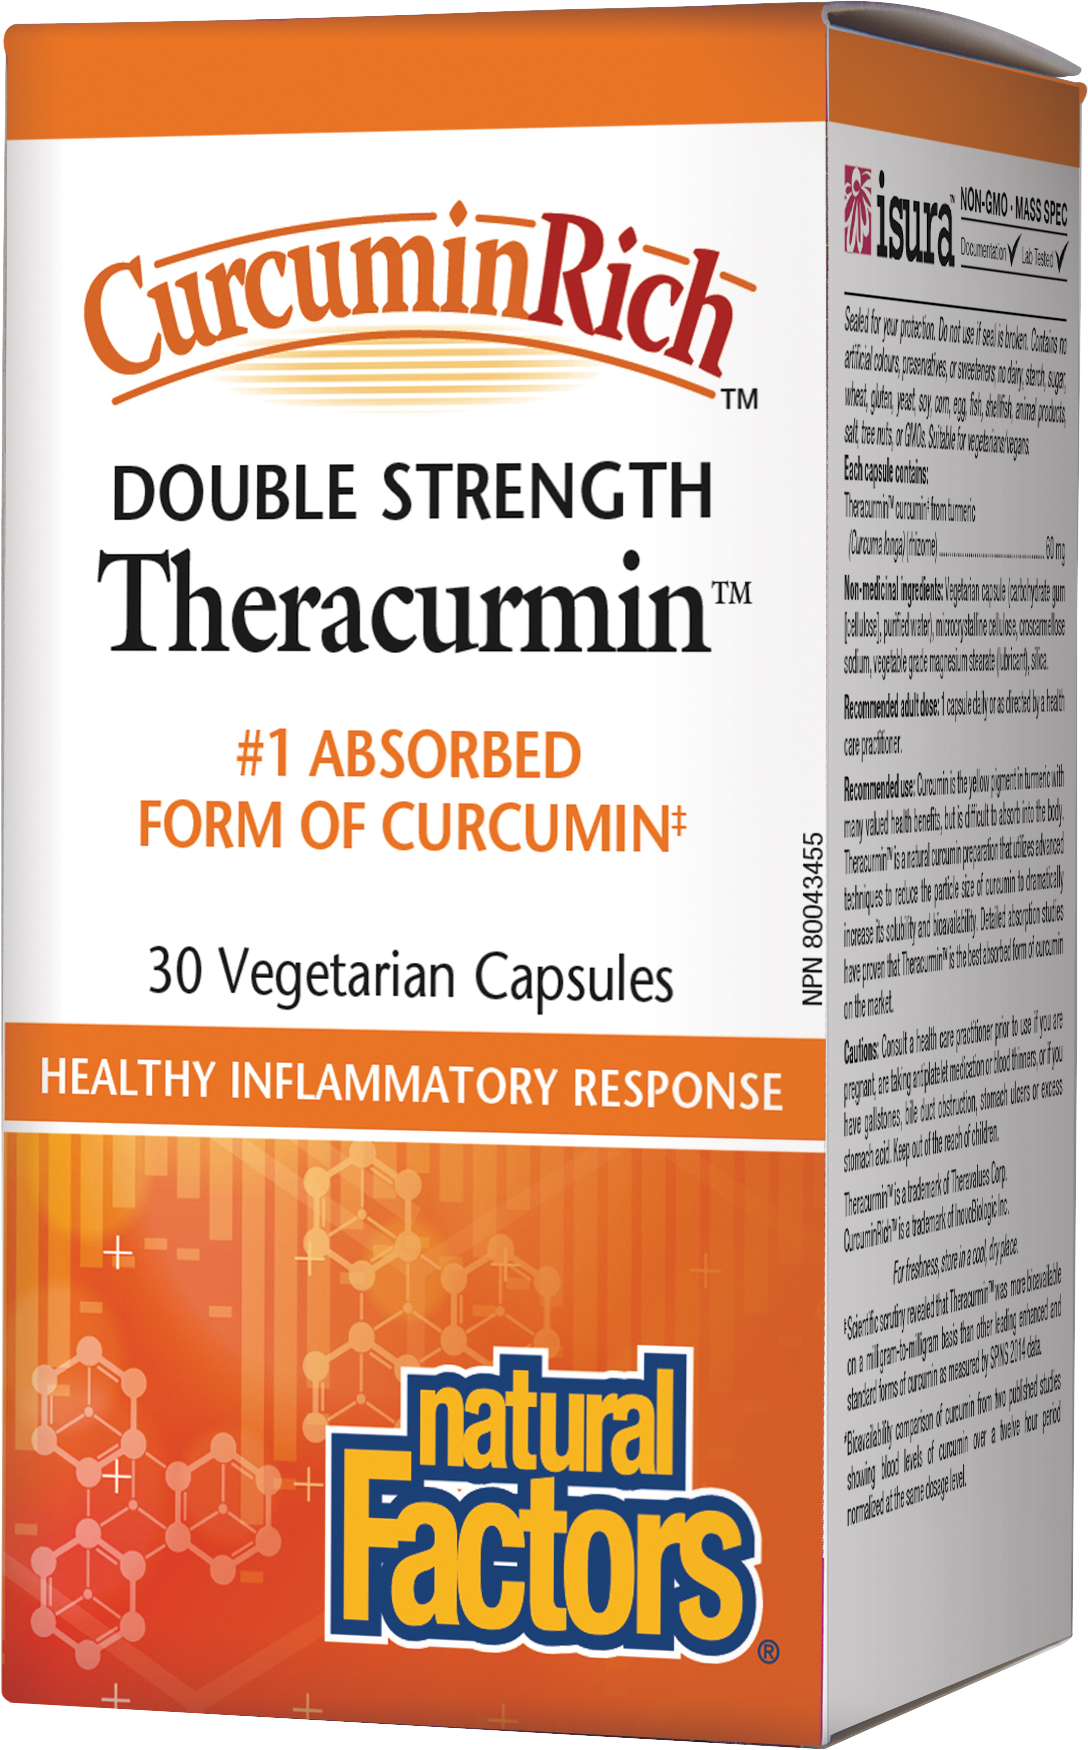 Natural Factors CurcuminRich Double Strength Theracurmin 60mg 30 Vegetarian Capsules